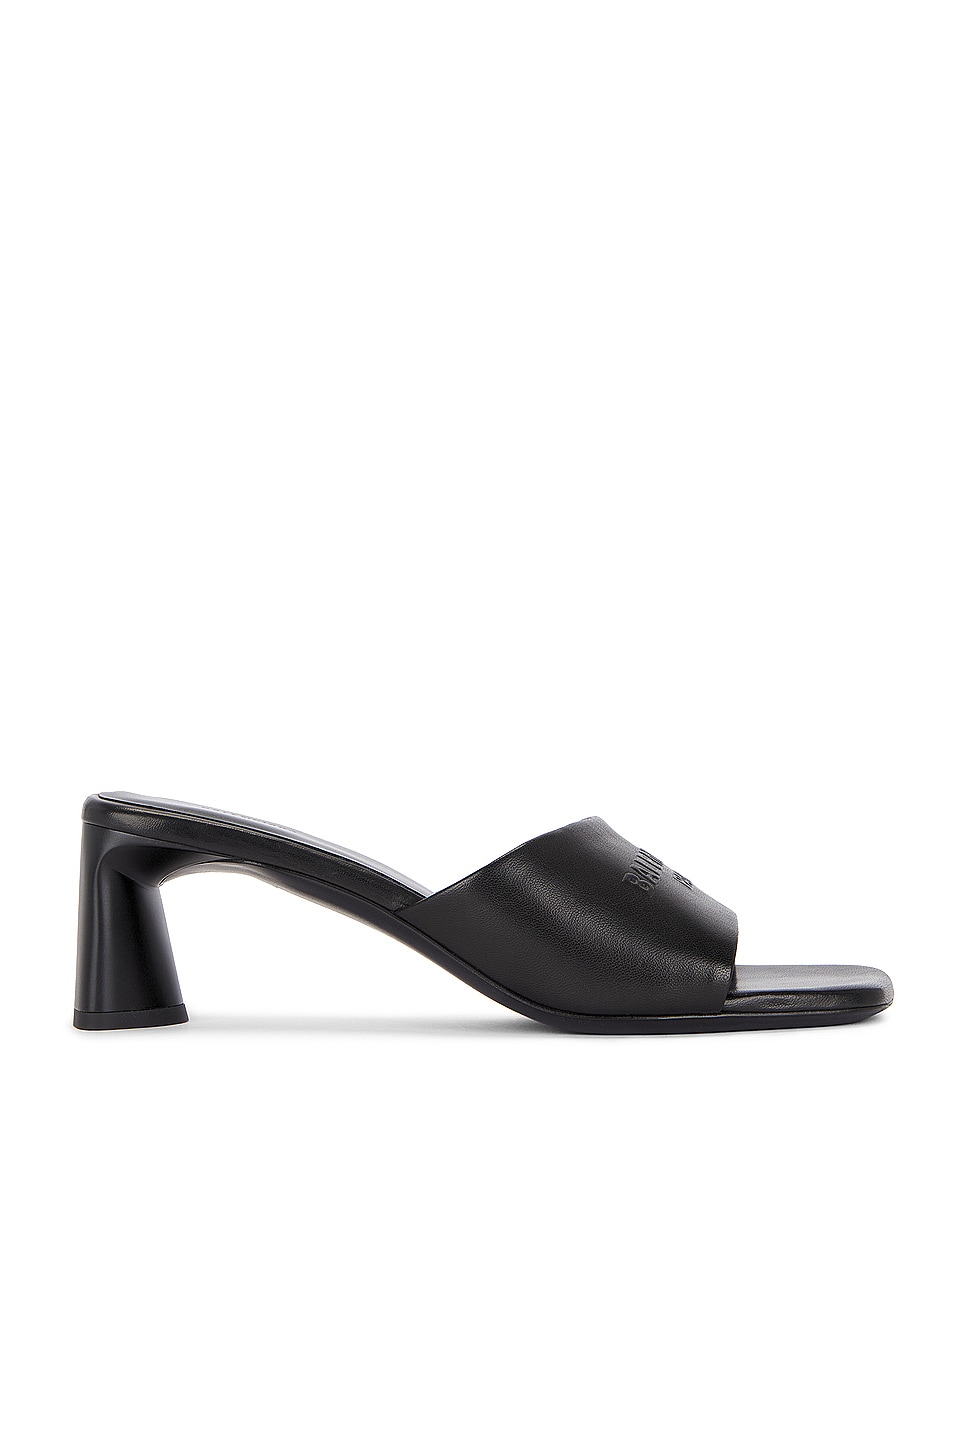 Image 1 of Balenciaga Dutyfree Sandal in Black